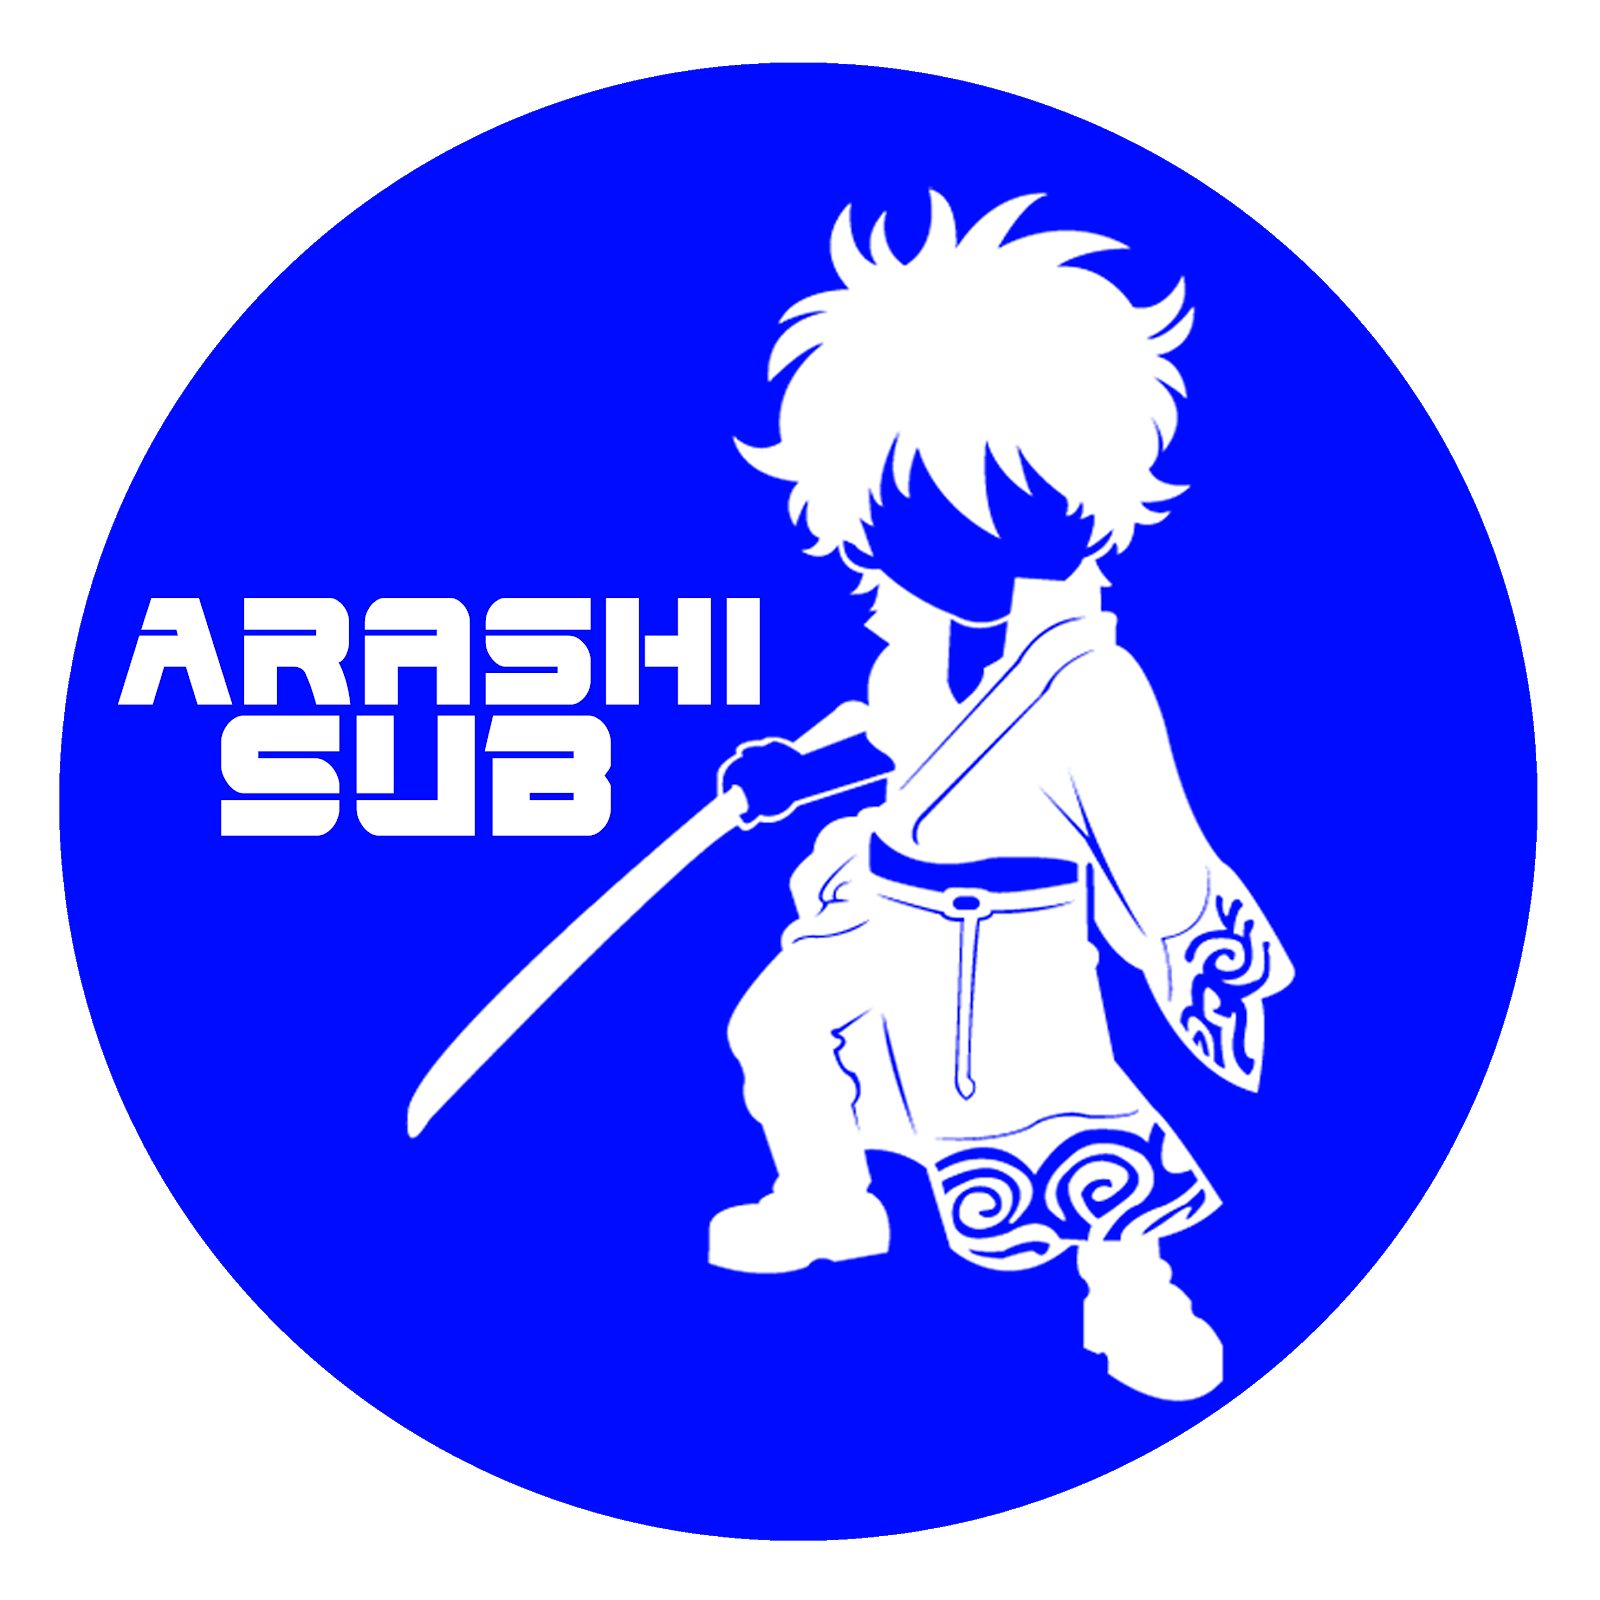 Arashisub I Download Anime, Game, Movie Sub Indonesia dan Inggris